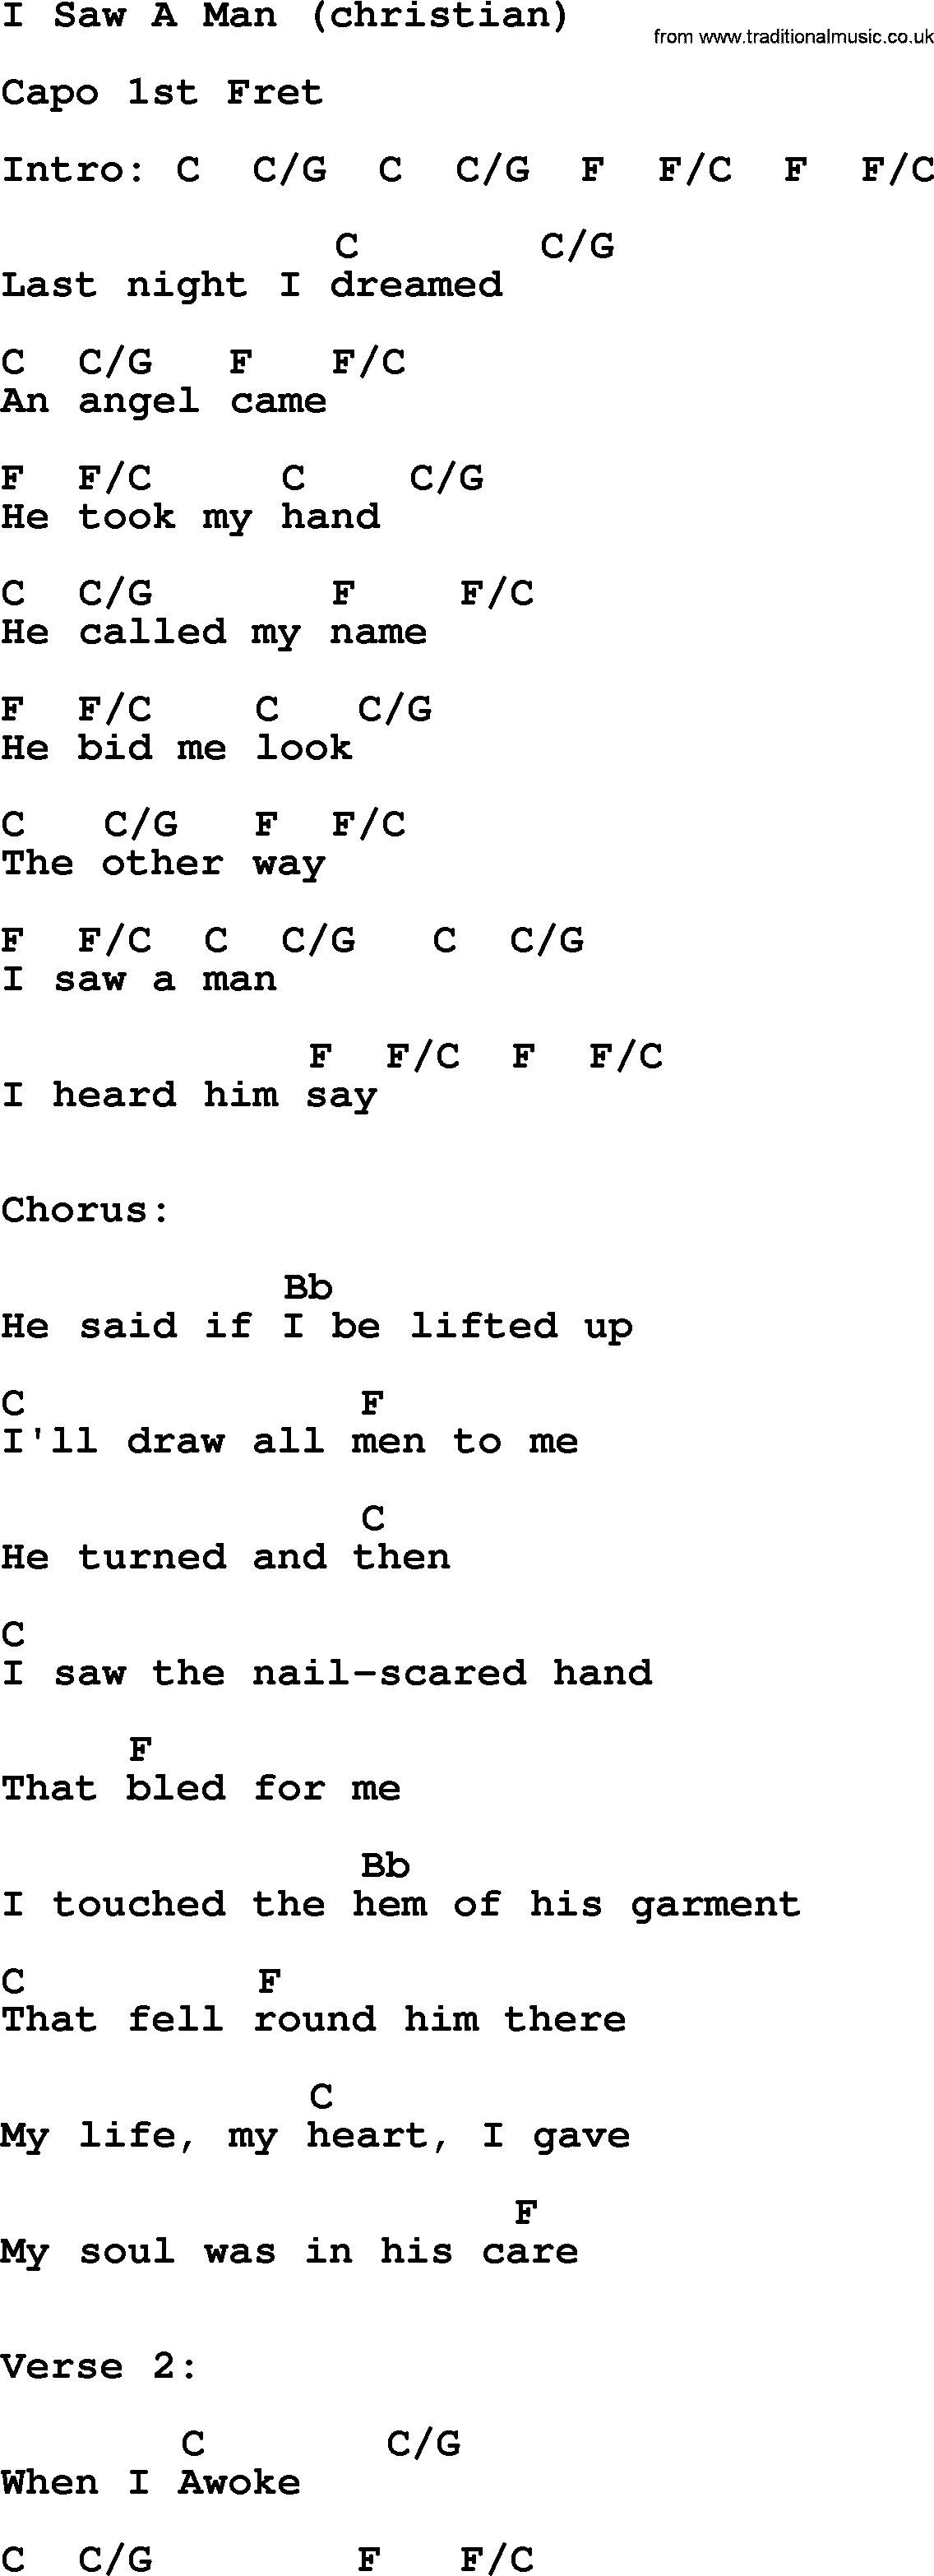 Johnny Cash song I Saw A Man (Christian), lyrics and chords